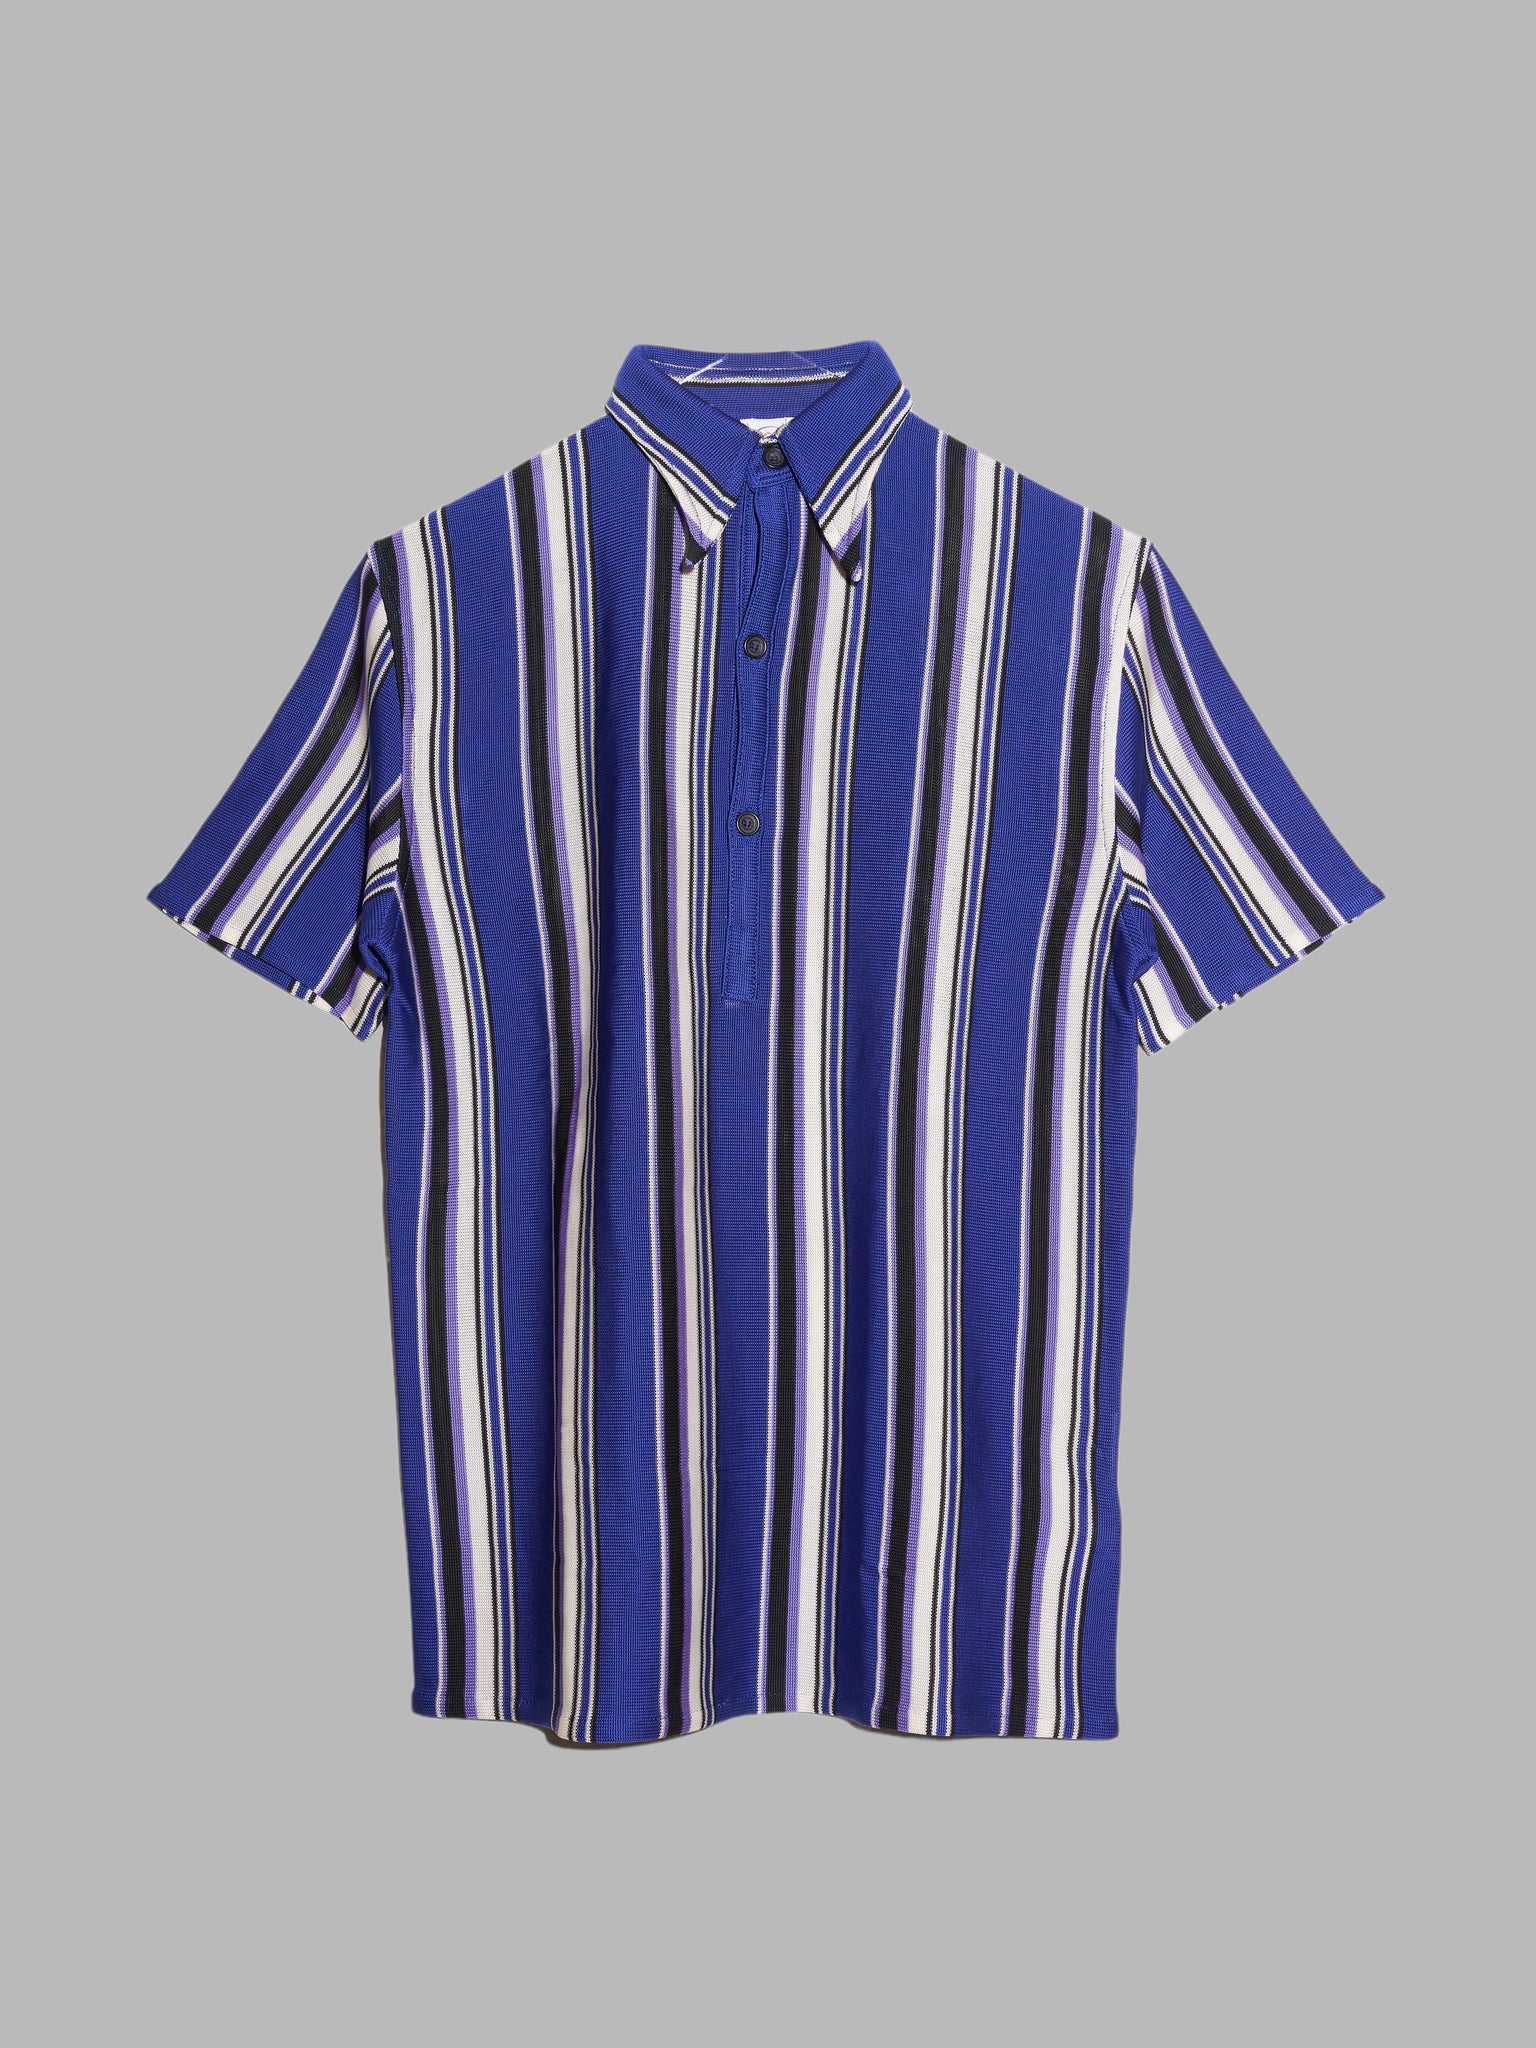 Mistake ? By Ozwald Boateng 1990s purple white striped nylon polo shirt - size 38